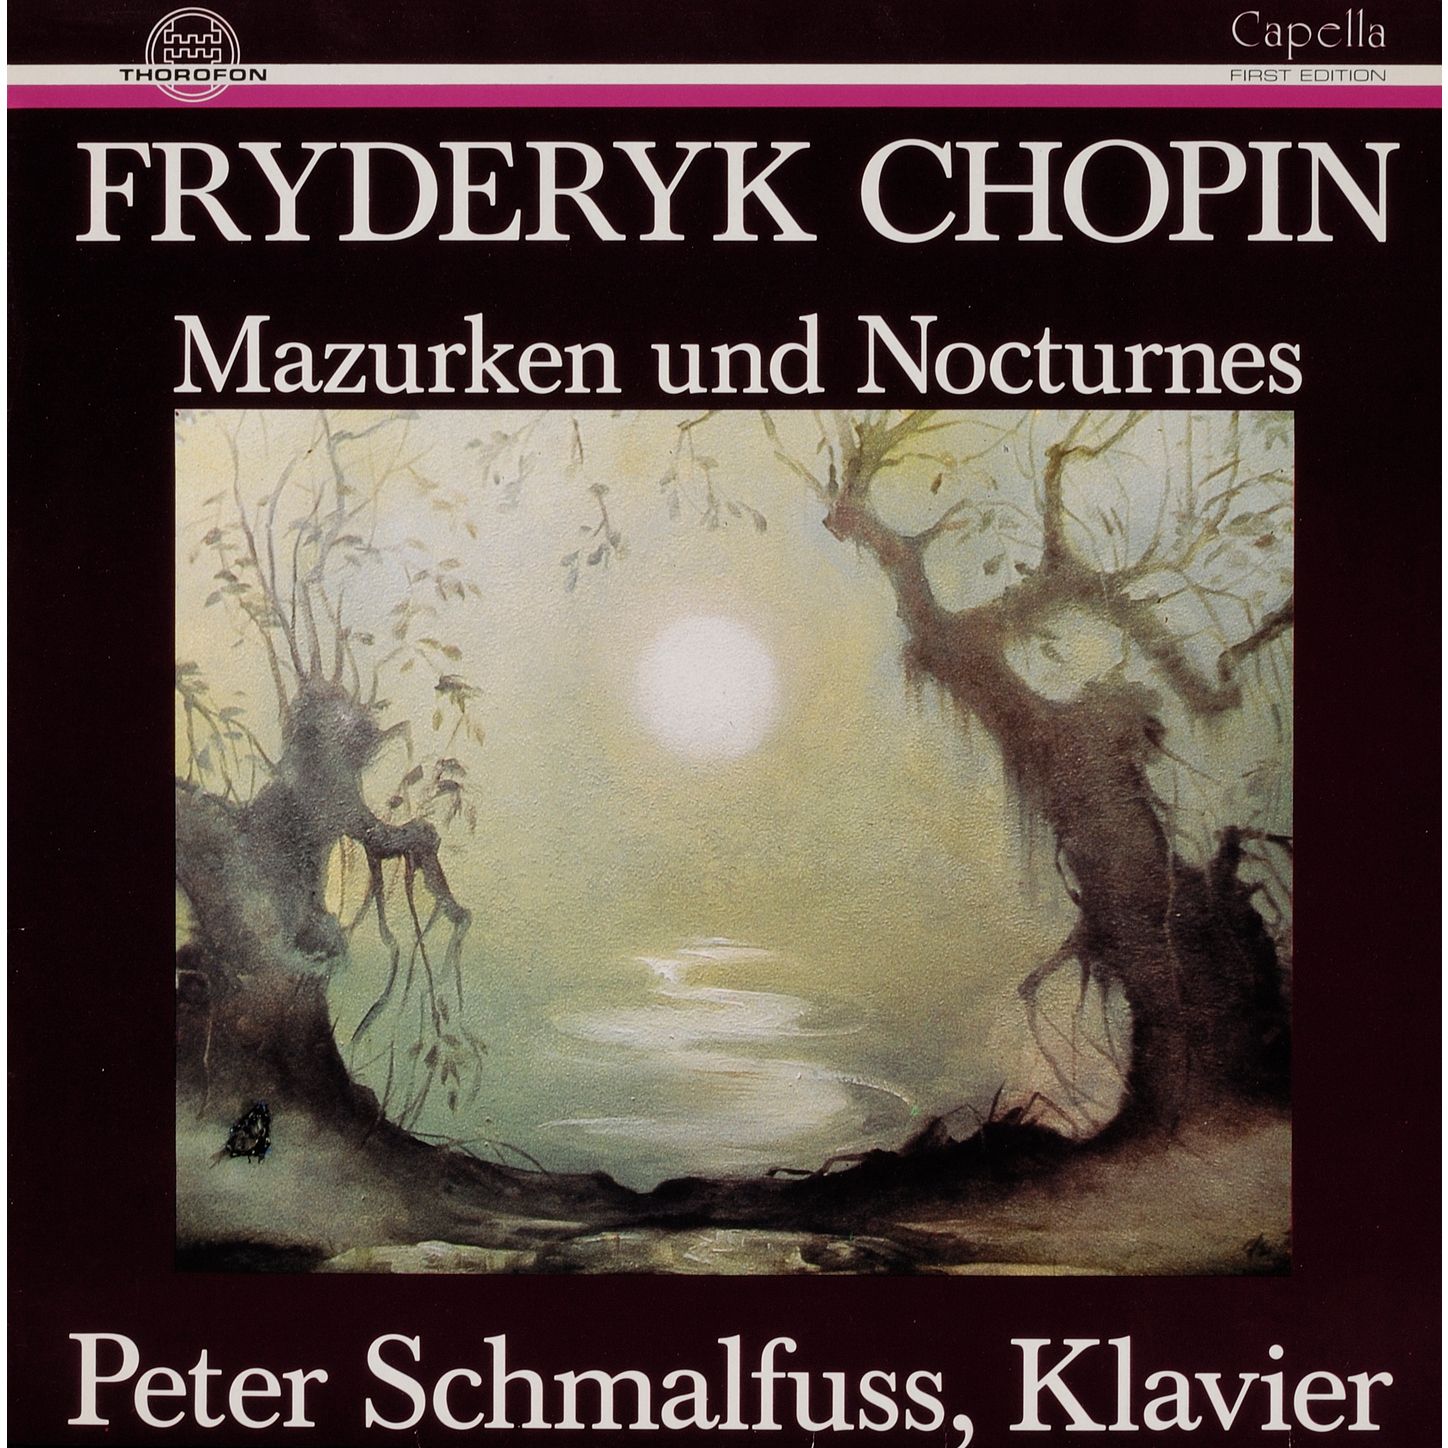 Drei Mazurken fü r Klavier in AFlat Major, Op. 50, No. 2